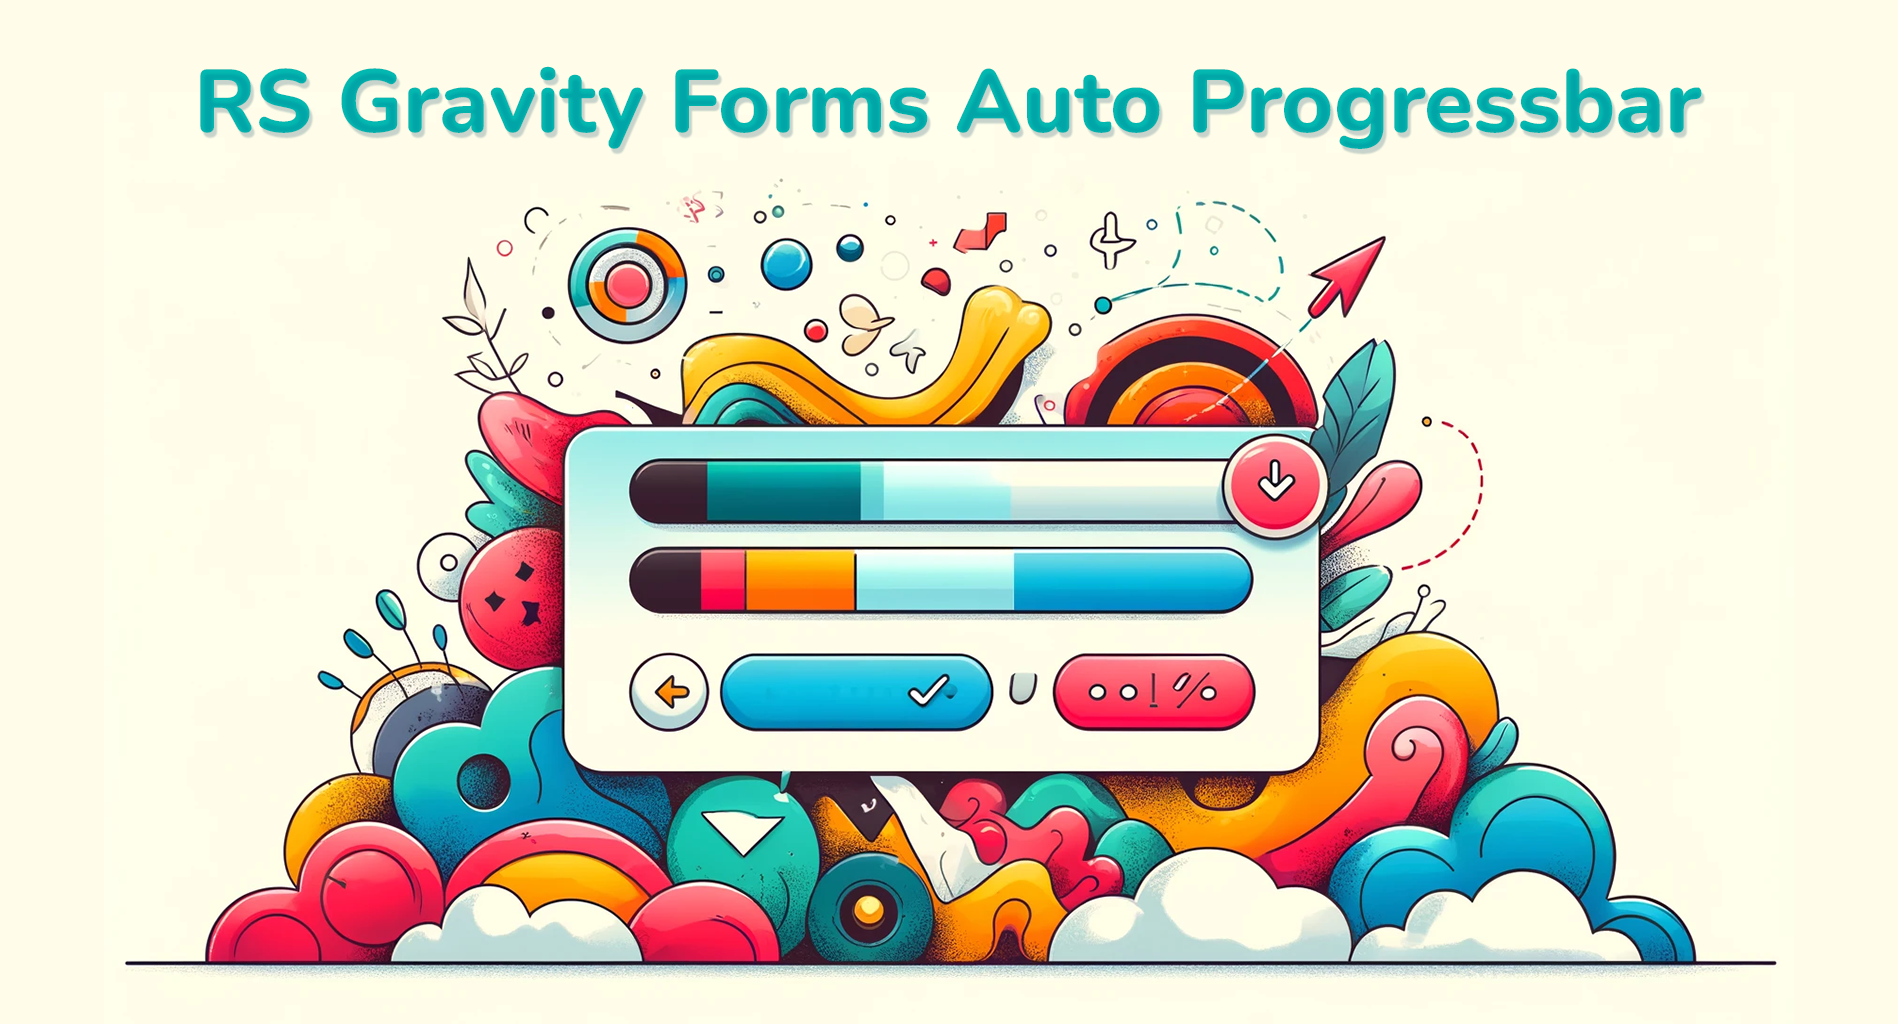 RS Gravity Forms Auto Progressbar